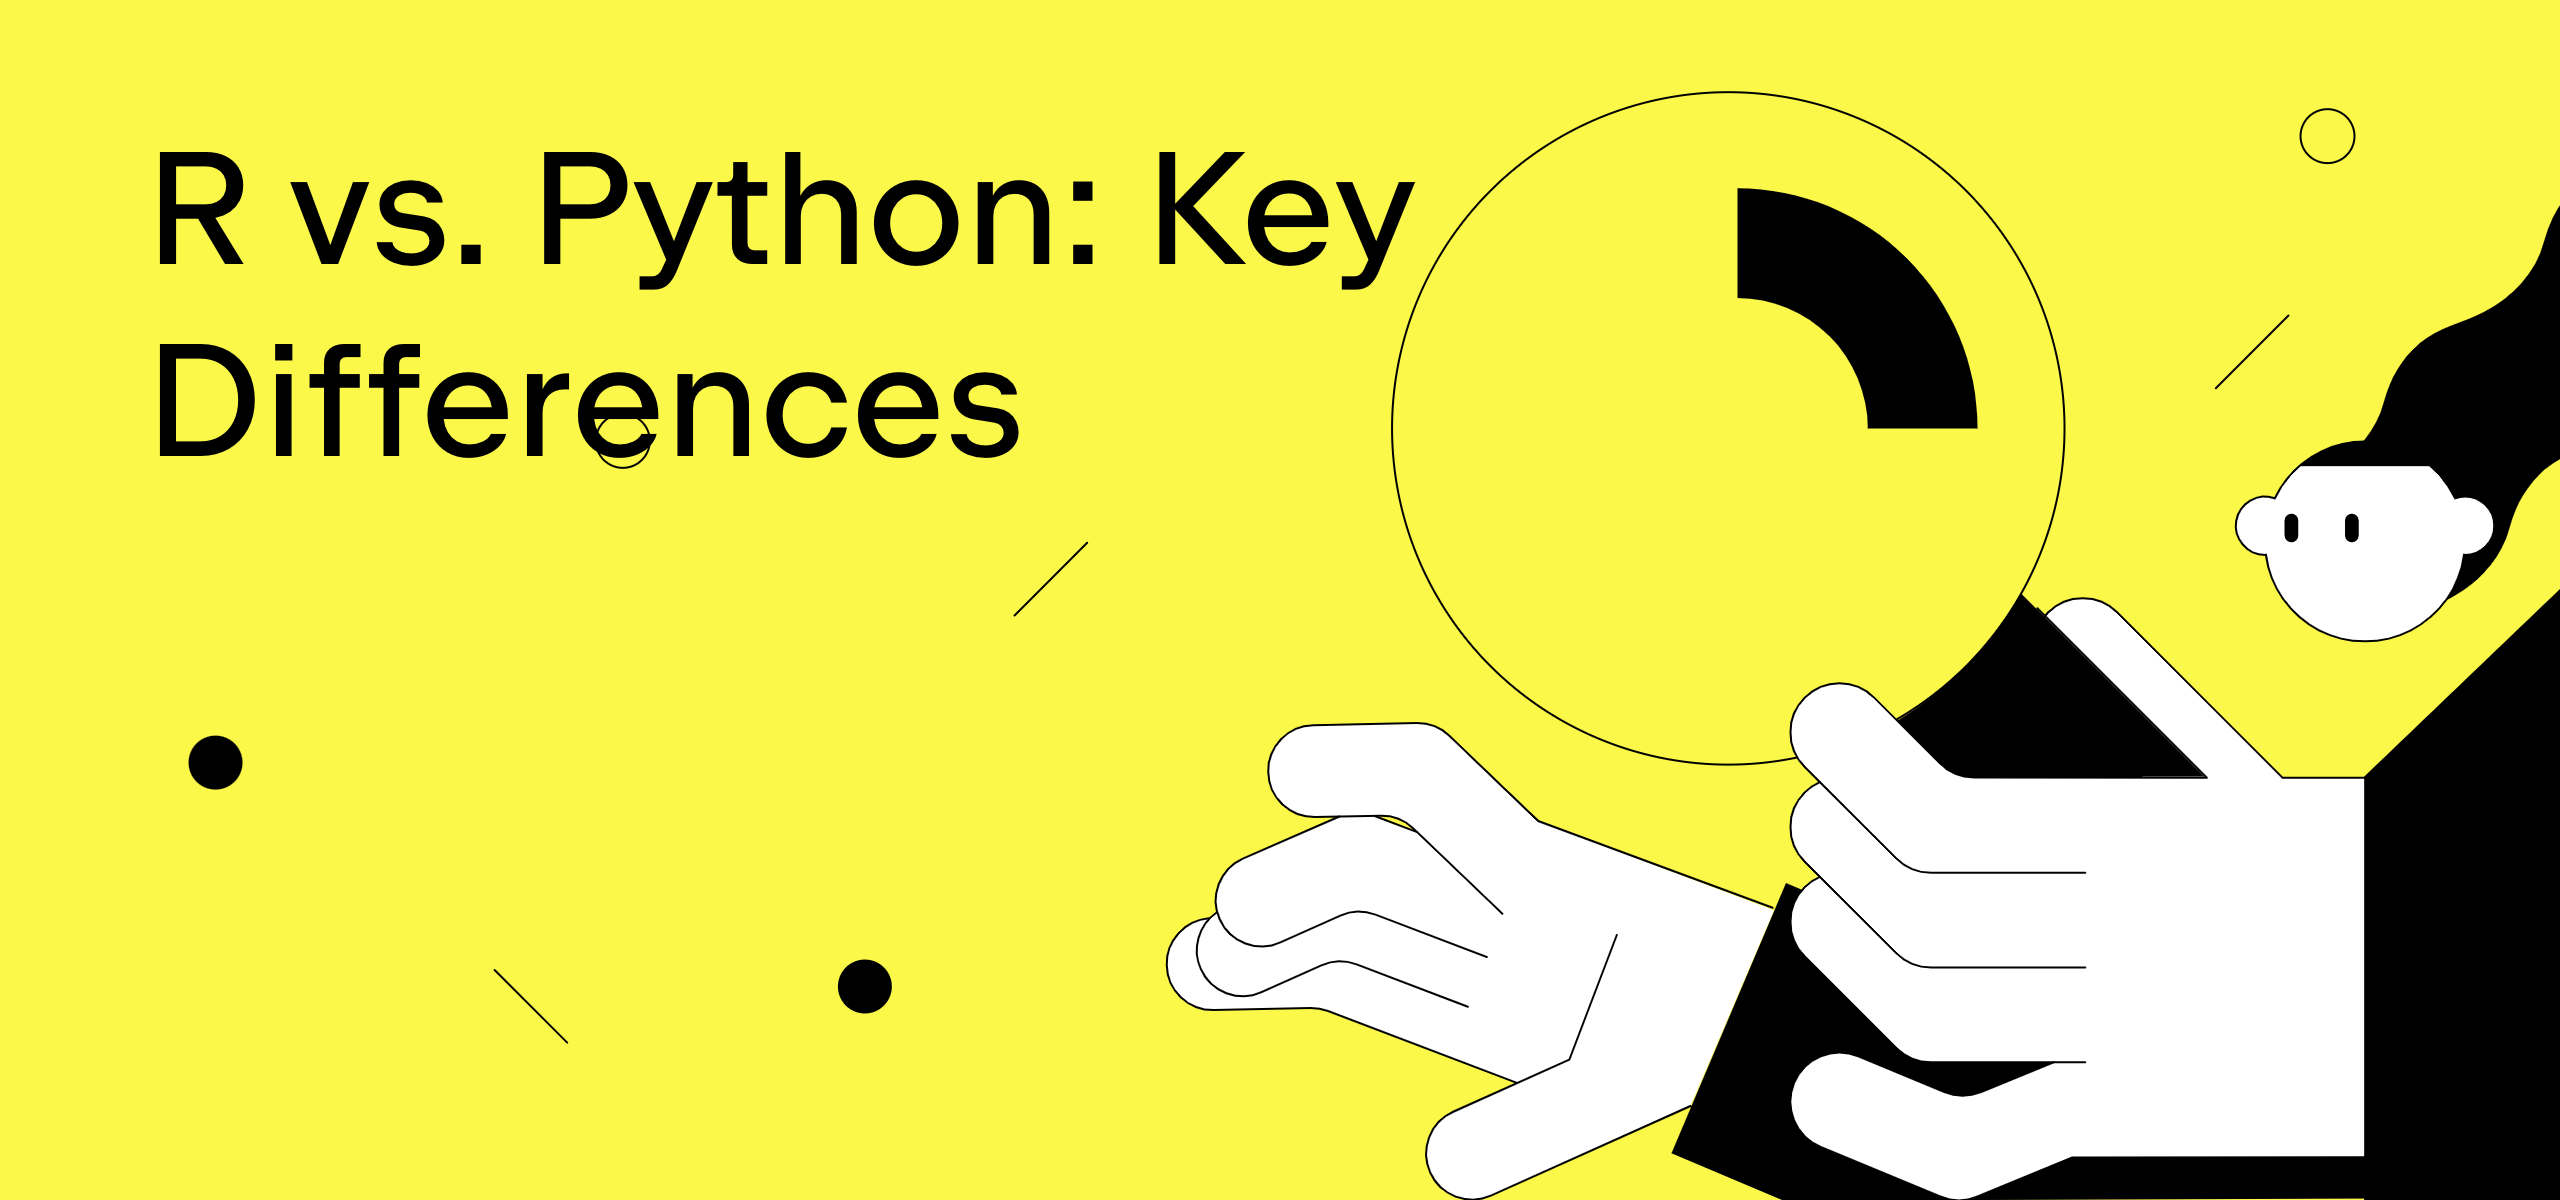 R vs. Python: Key Differences